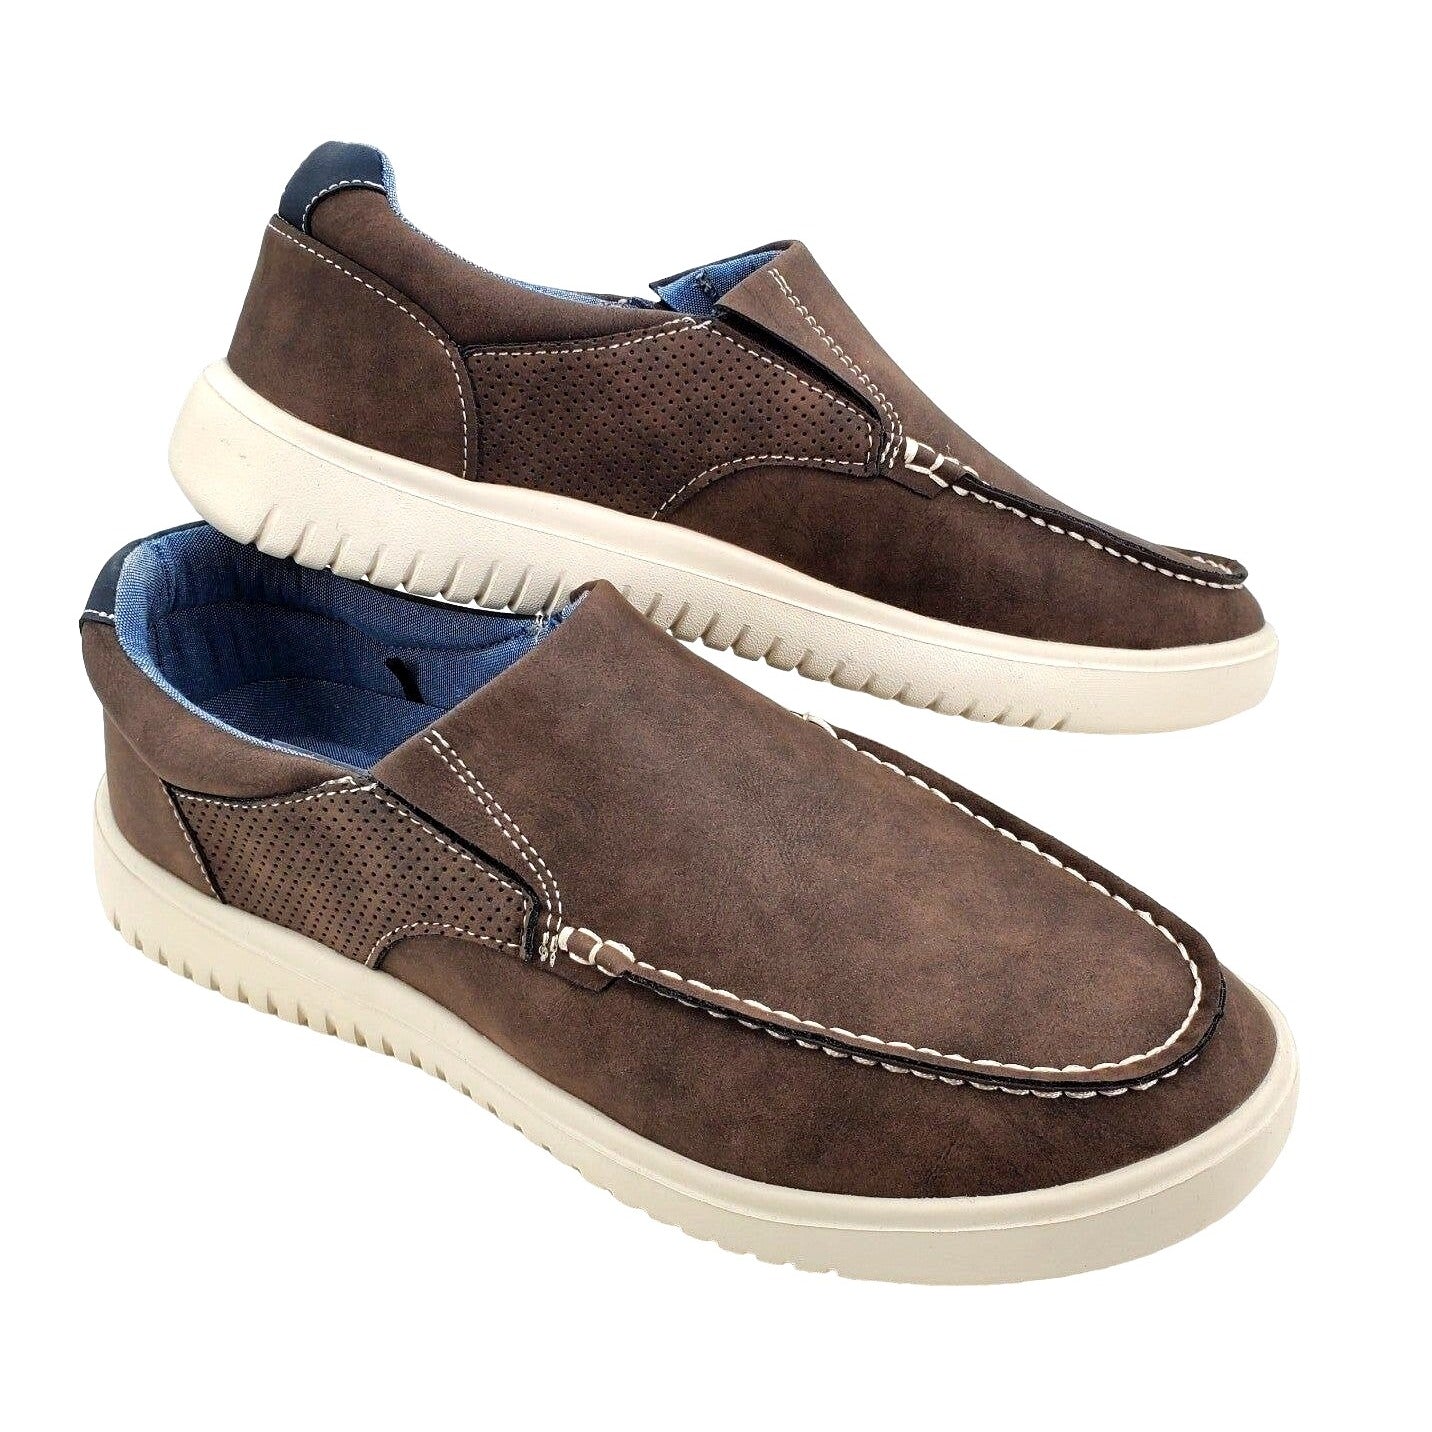 IZOD Sneakers Men's Hampton Slip On Casual Loafer Shoes